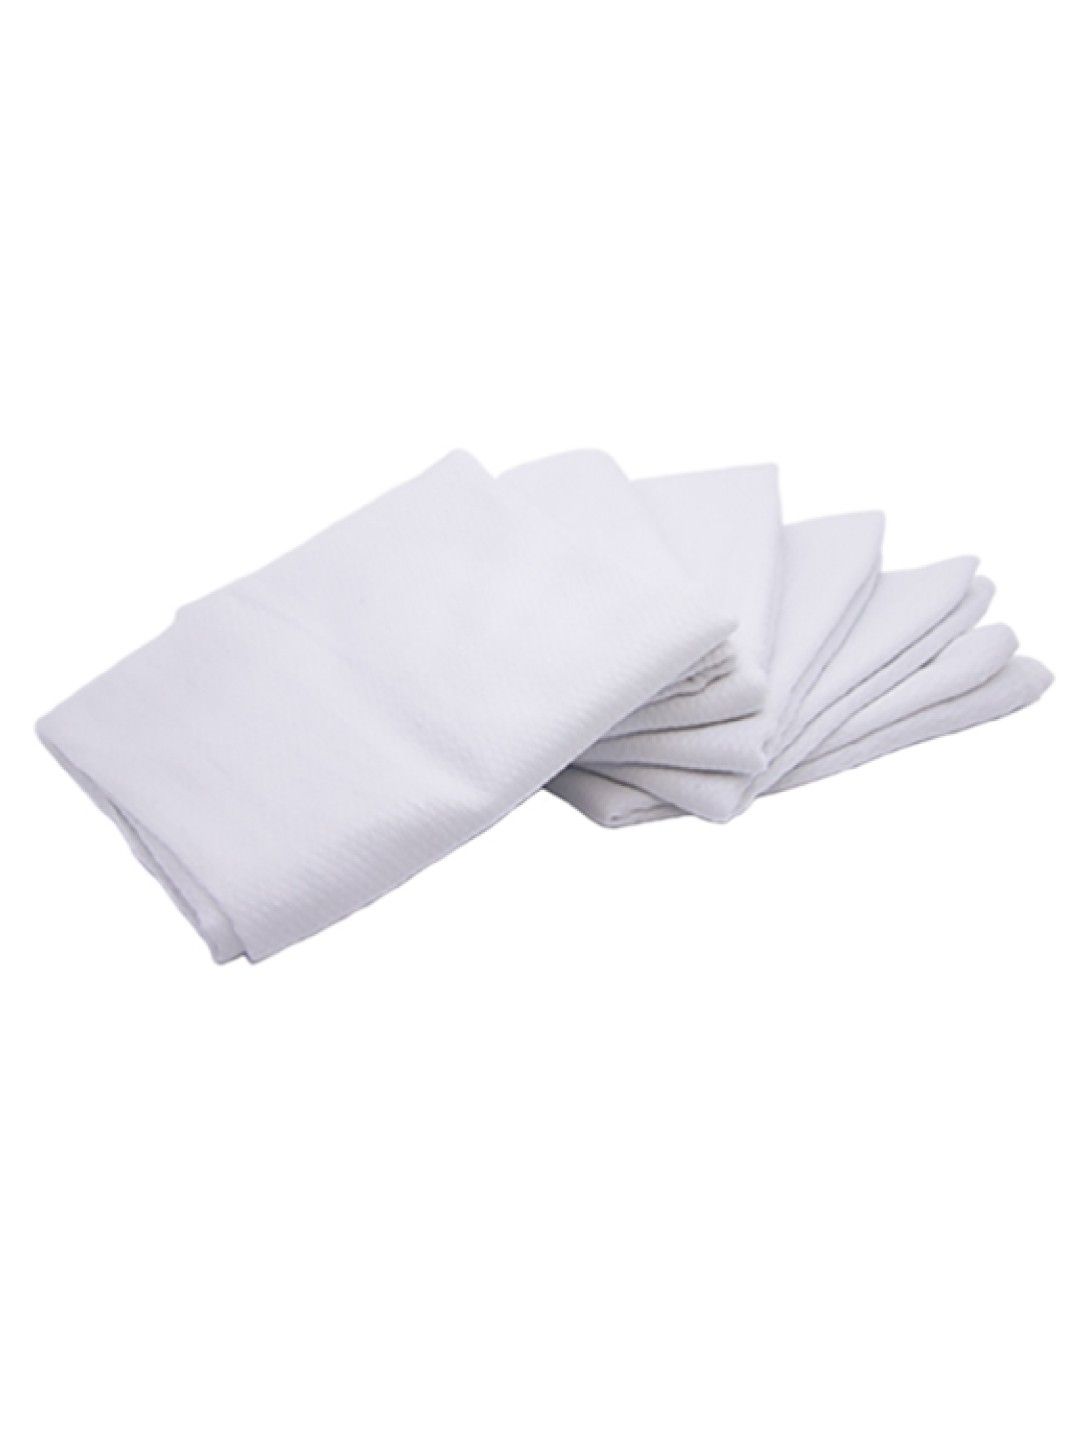 BestCare Cloth Diaper Birdseye Pack of 6